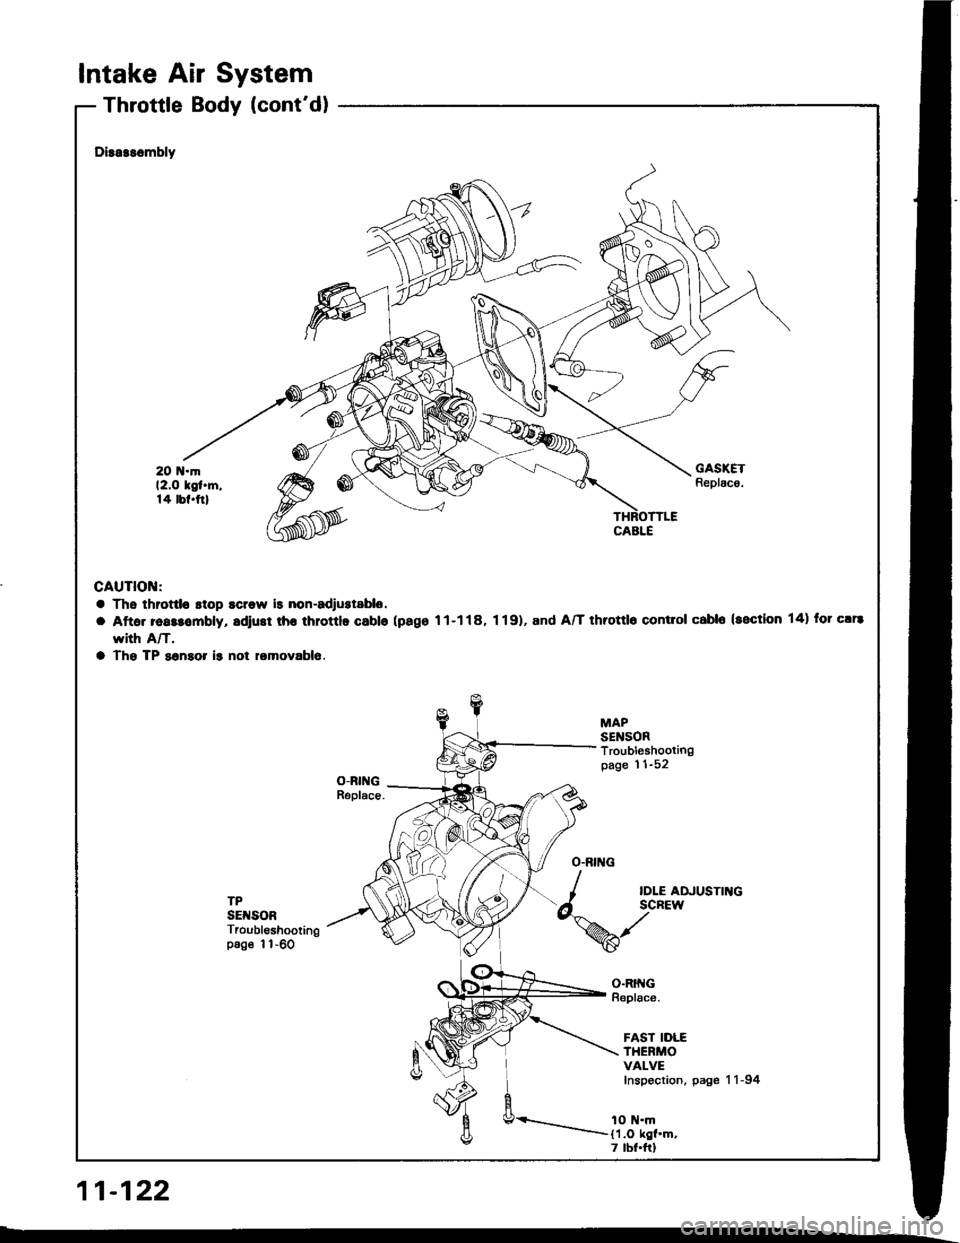 HONDA INTEGRA 1994 4.G Workshop Manual Intake Air System
Throttle Body (contdl
11-122
Dirarssmbly
GAUTION:
a Ths throttlo stop scrow is non-adrustablo.
a Aftar reassombly, adiust rhr throttlo Gablo (pago 11-118, 1 19). and A/T throttlo co